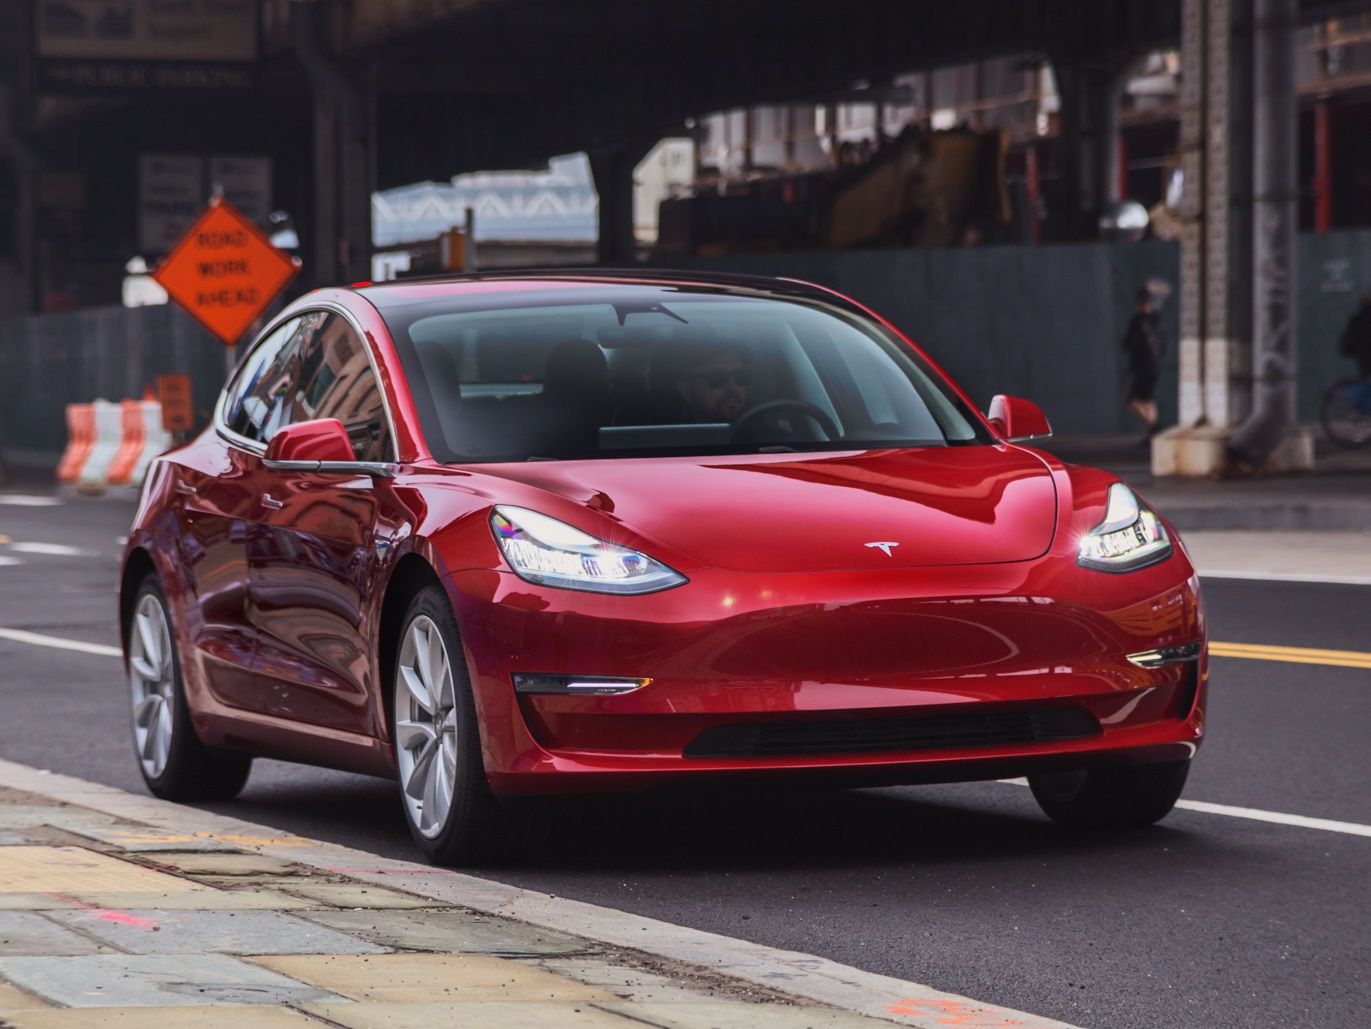 Red Tesla driving down street